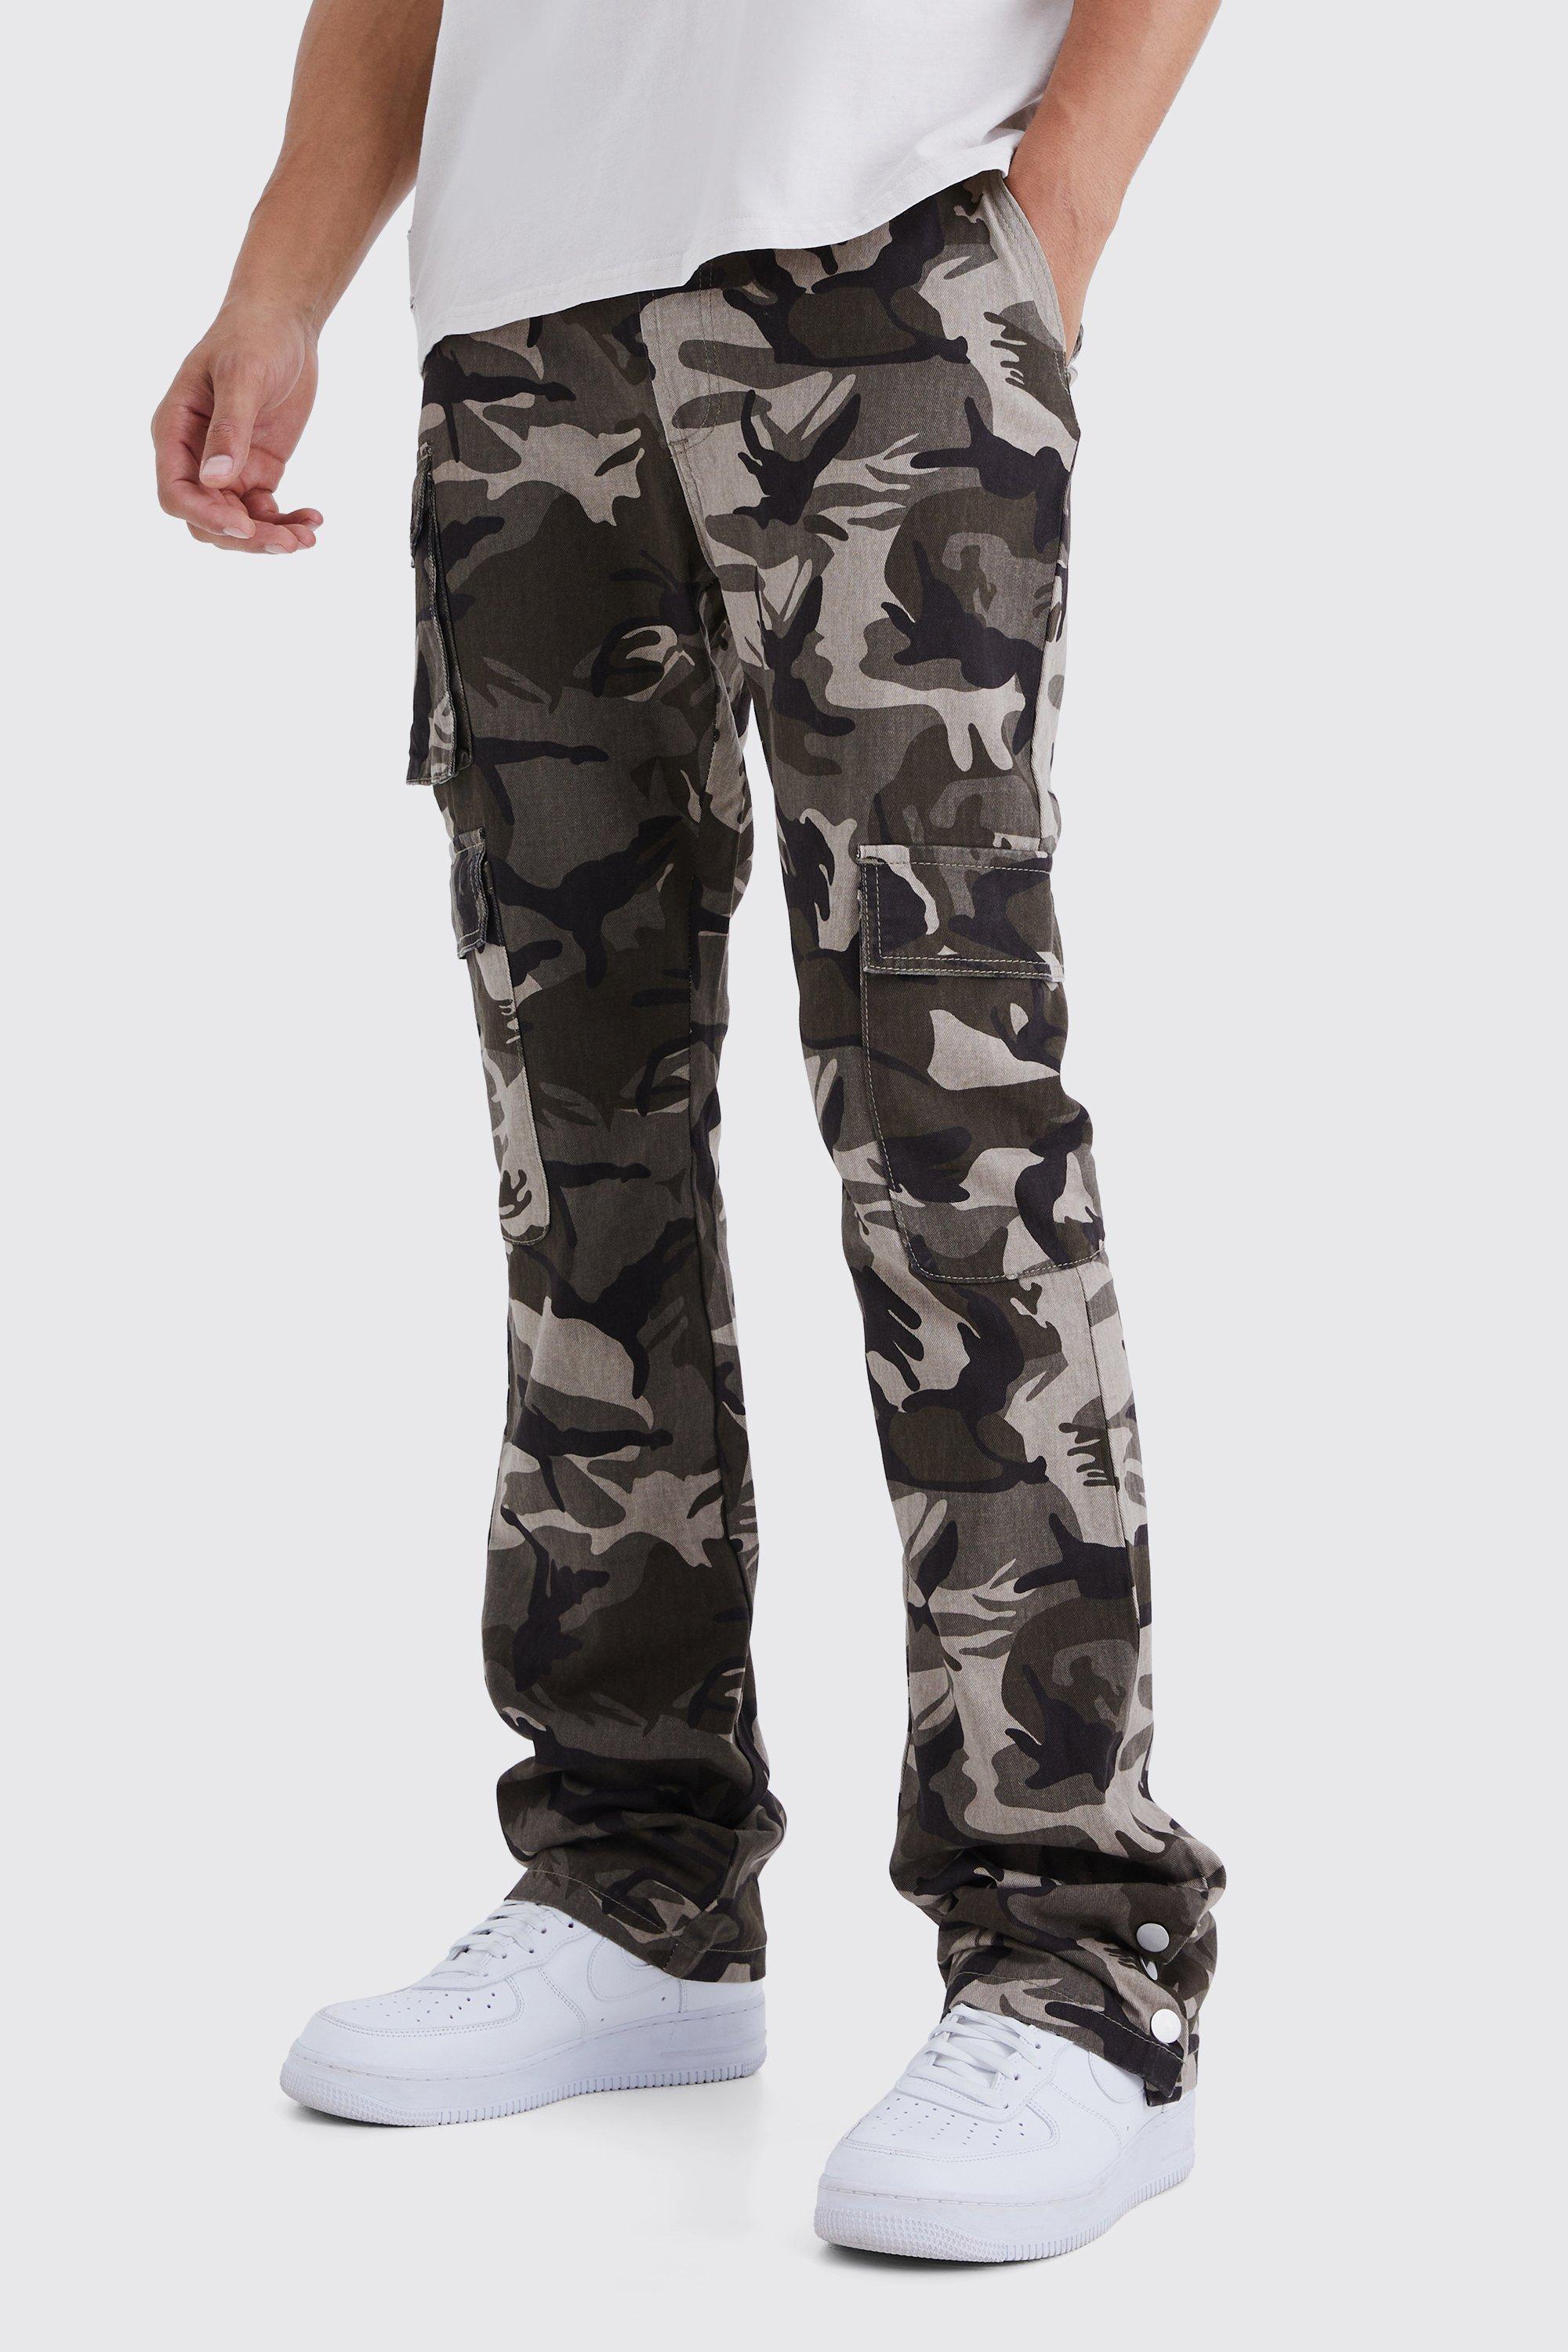 tall - pantalon cargo à imprimé camouflage homme - brun - 34, brun